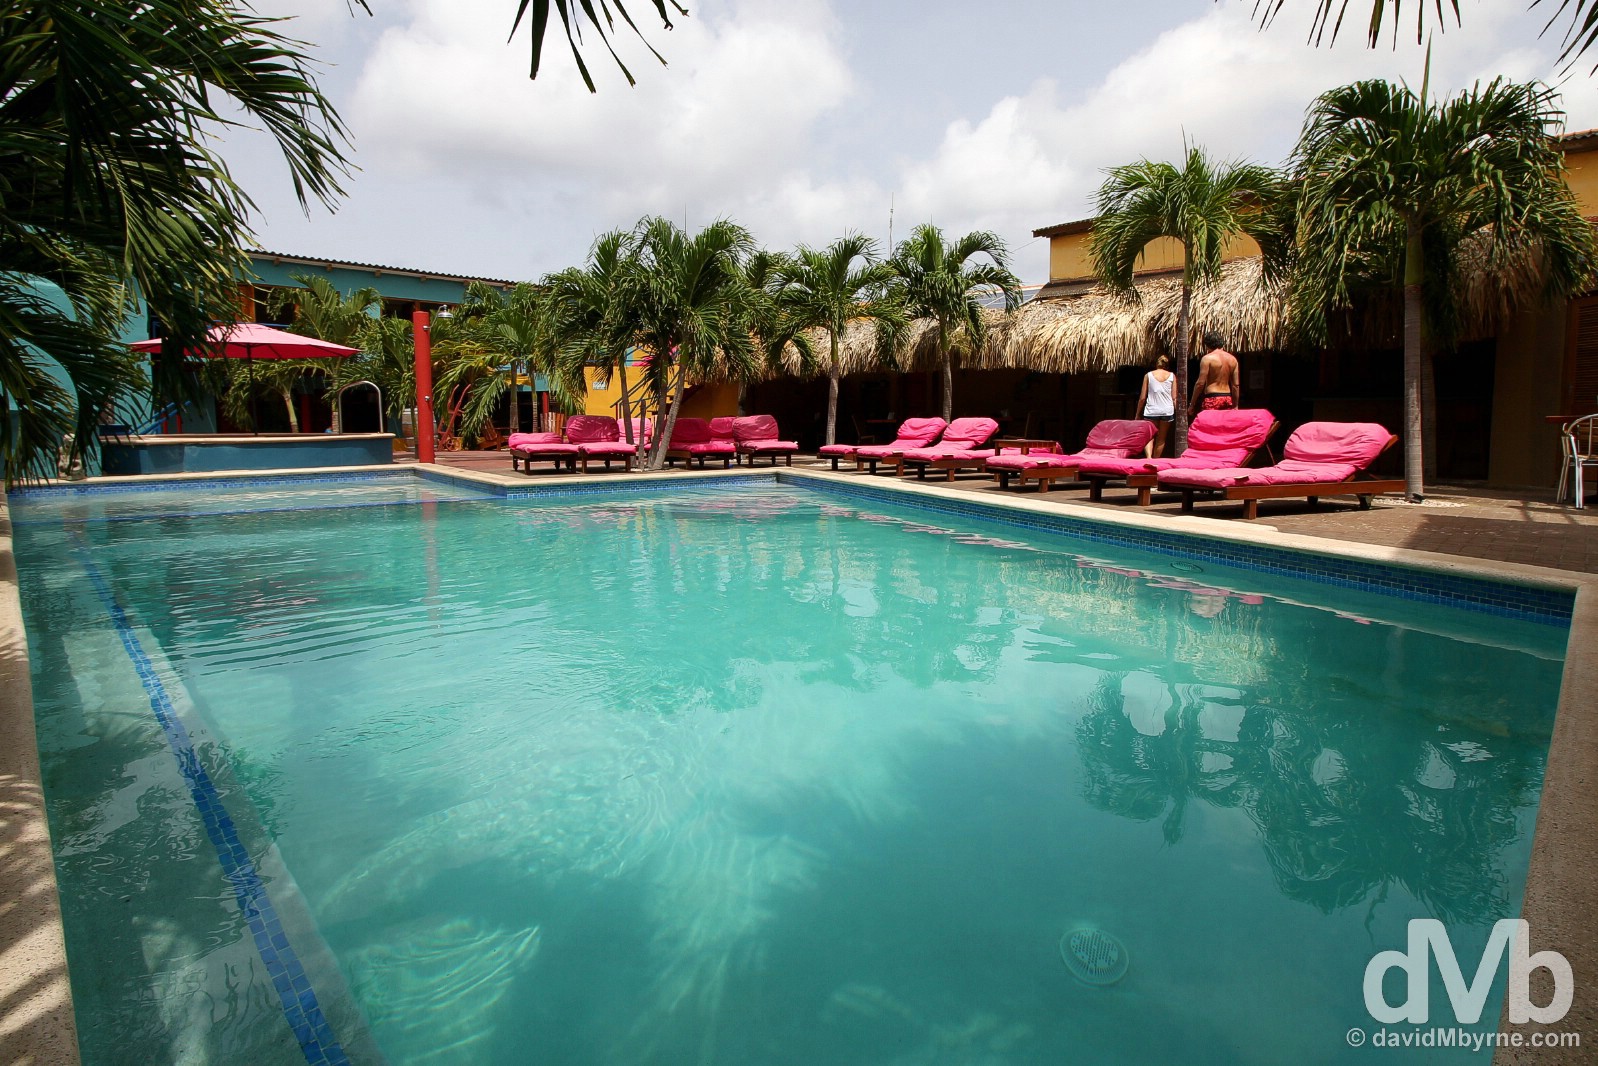 The Ritz Village, Scharlooweg, Willemstad, Curacao, Lesser Antilles. June 20, 2015.